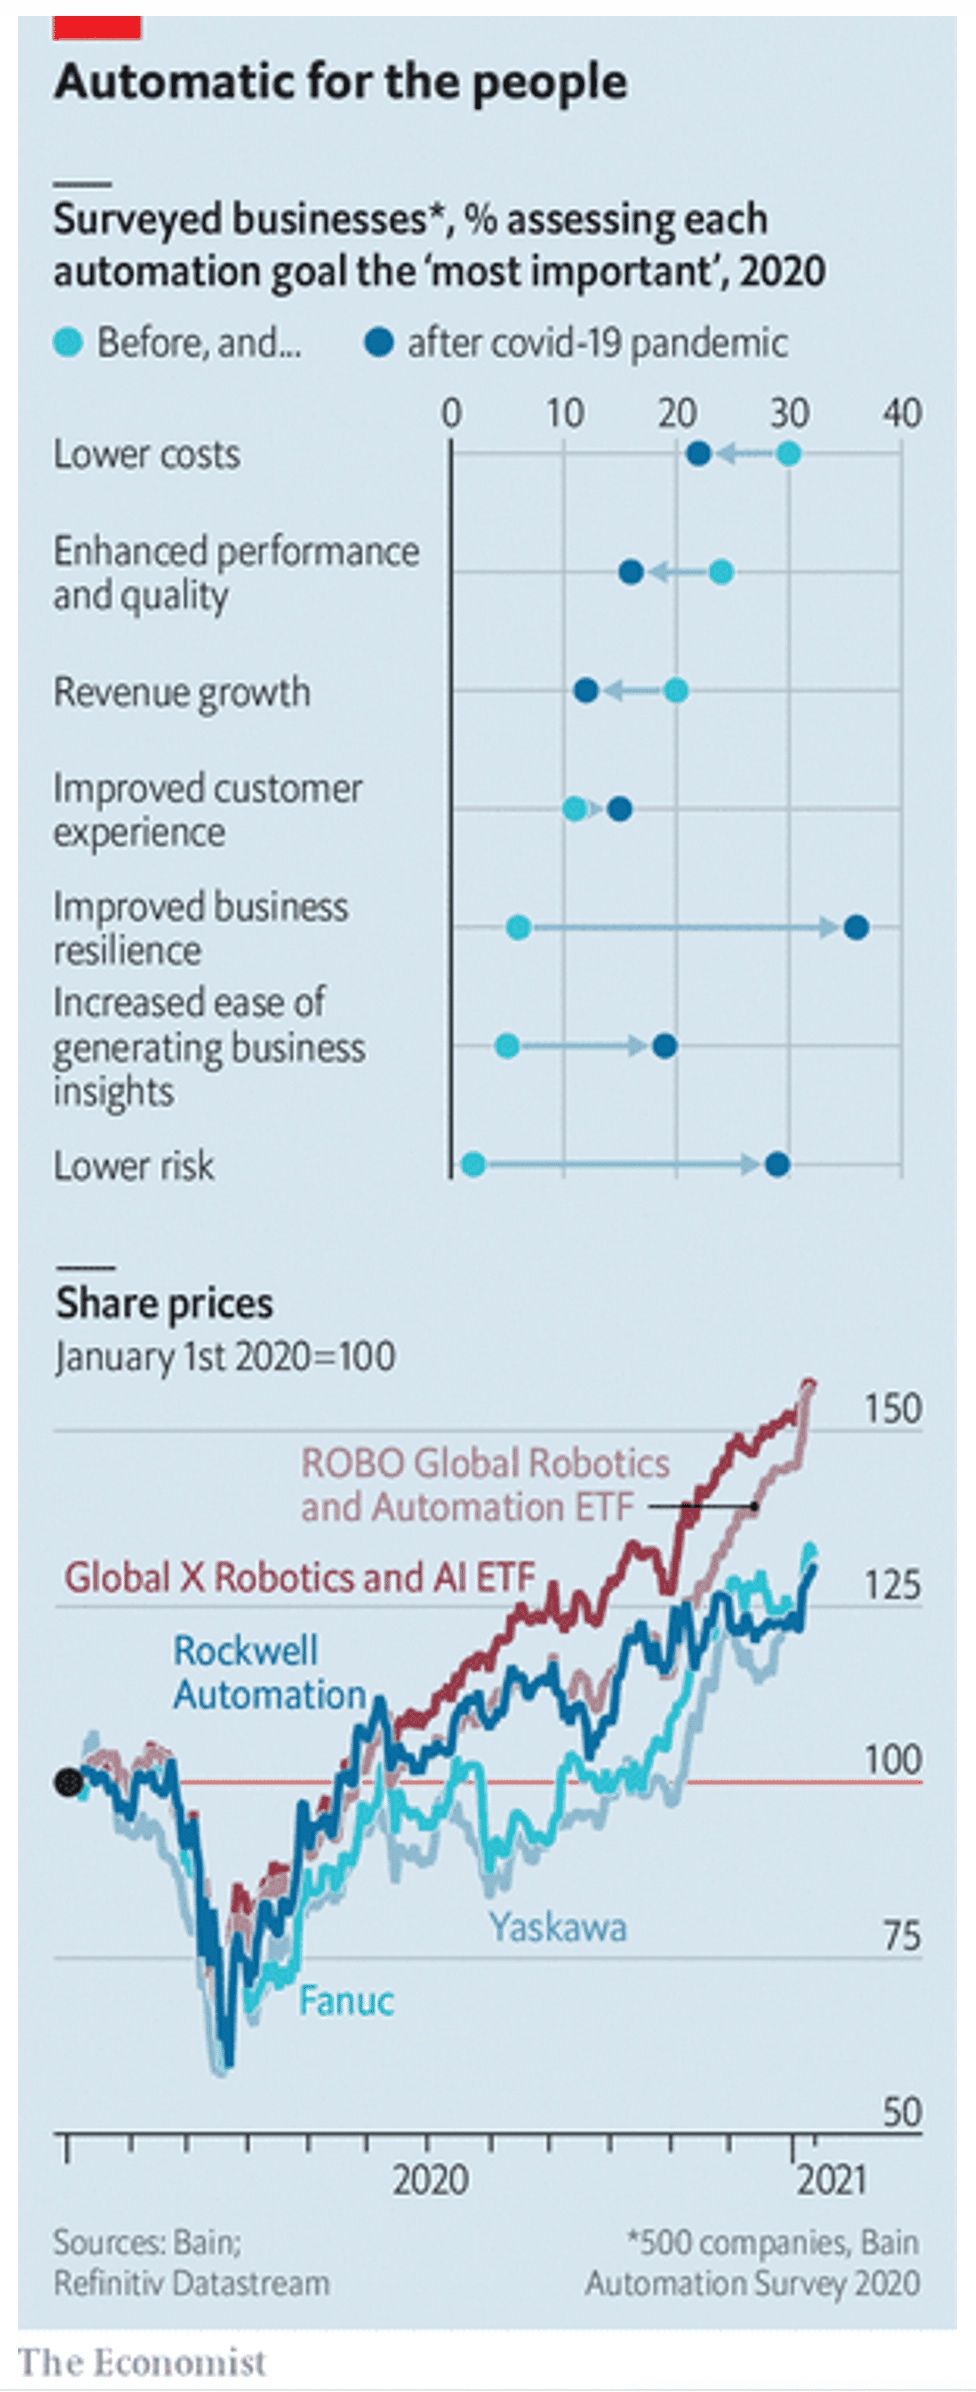 The economist survey shows business resilience gaining importance.